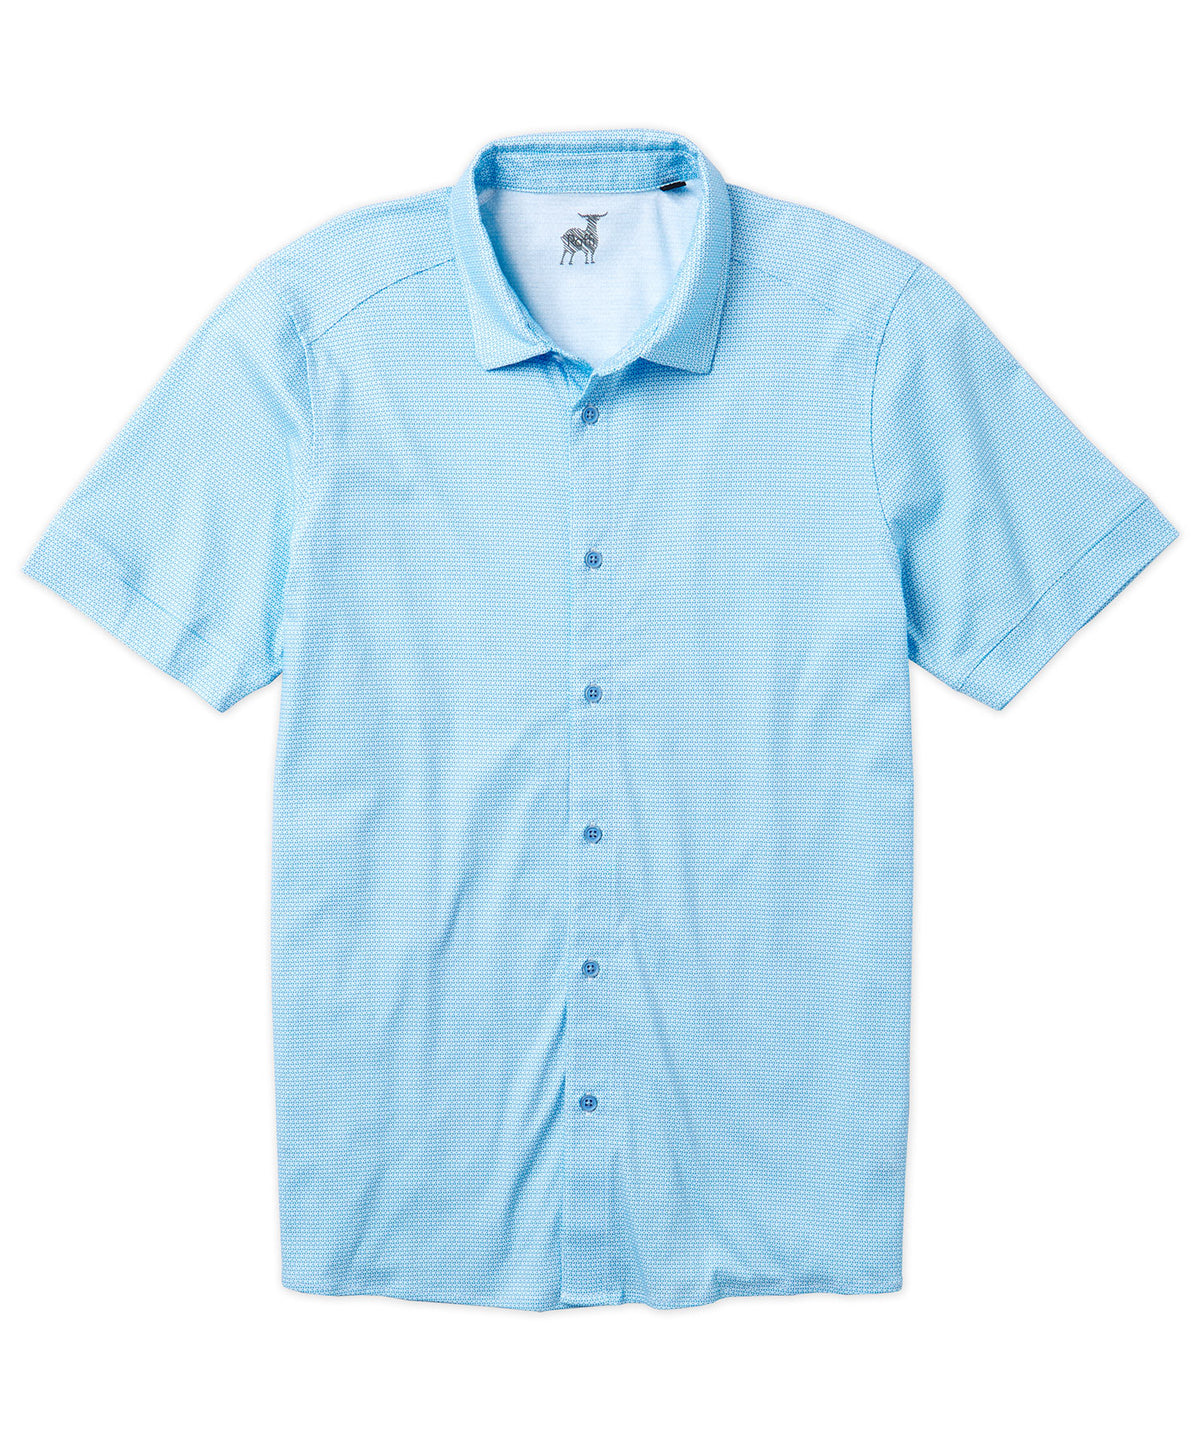 Raffi Geo Patterned Aqua Cotton Sport Shirt